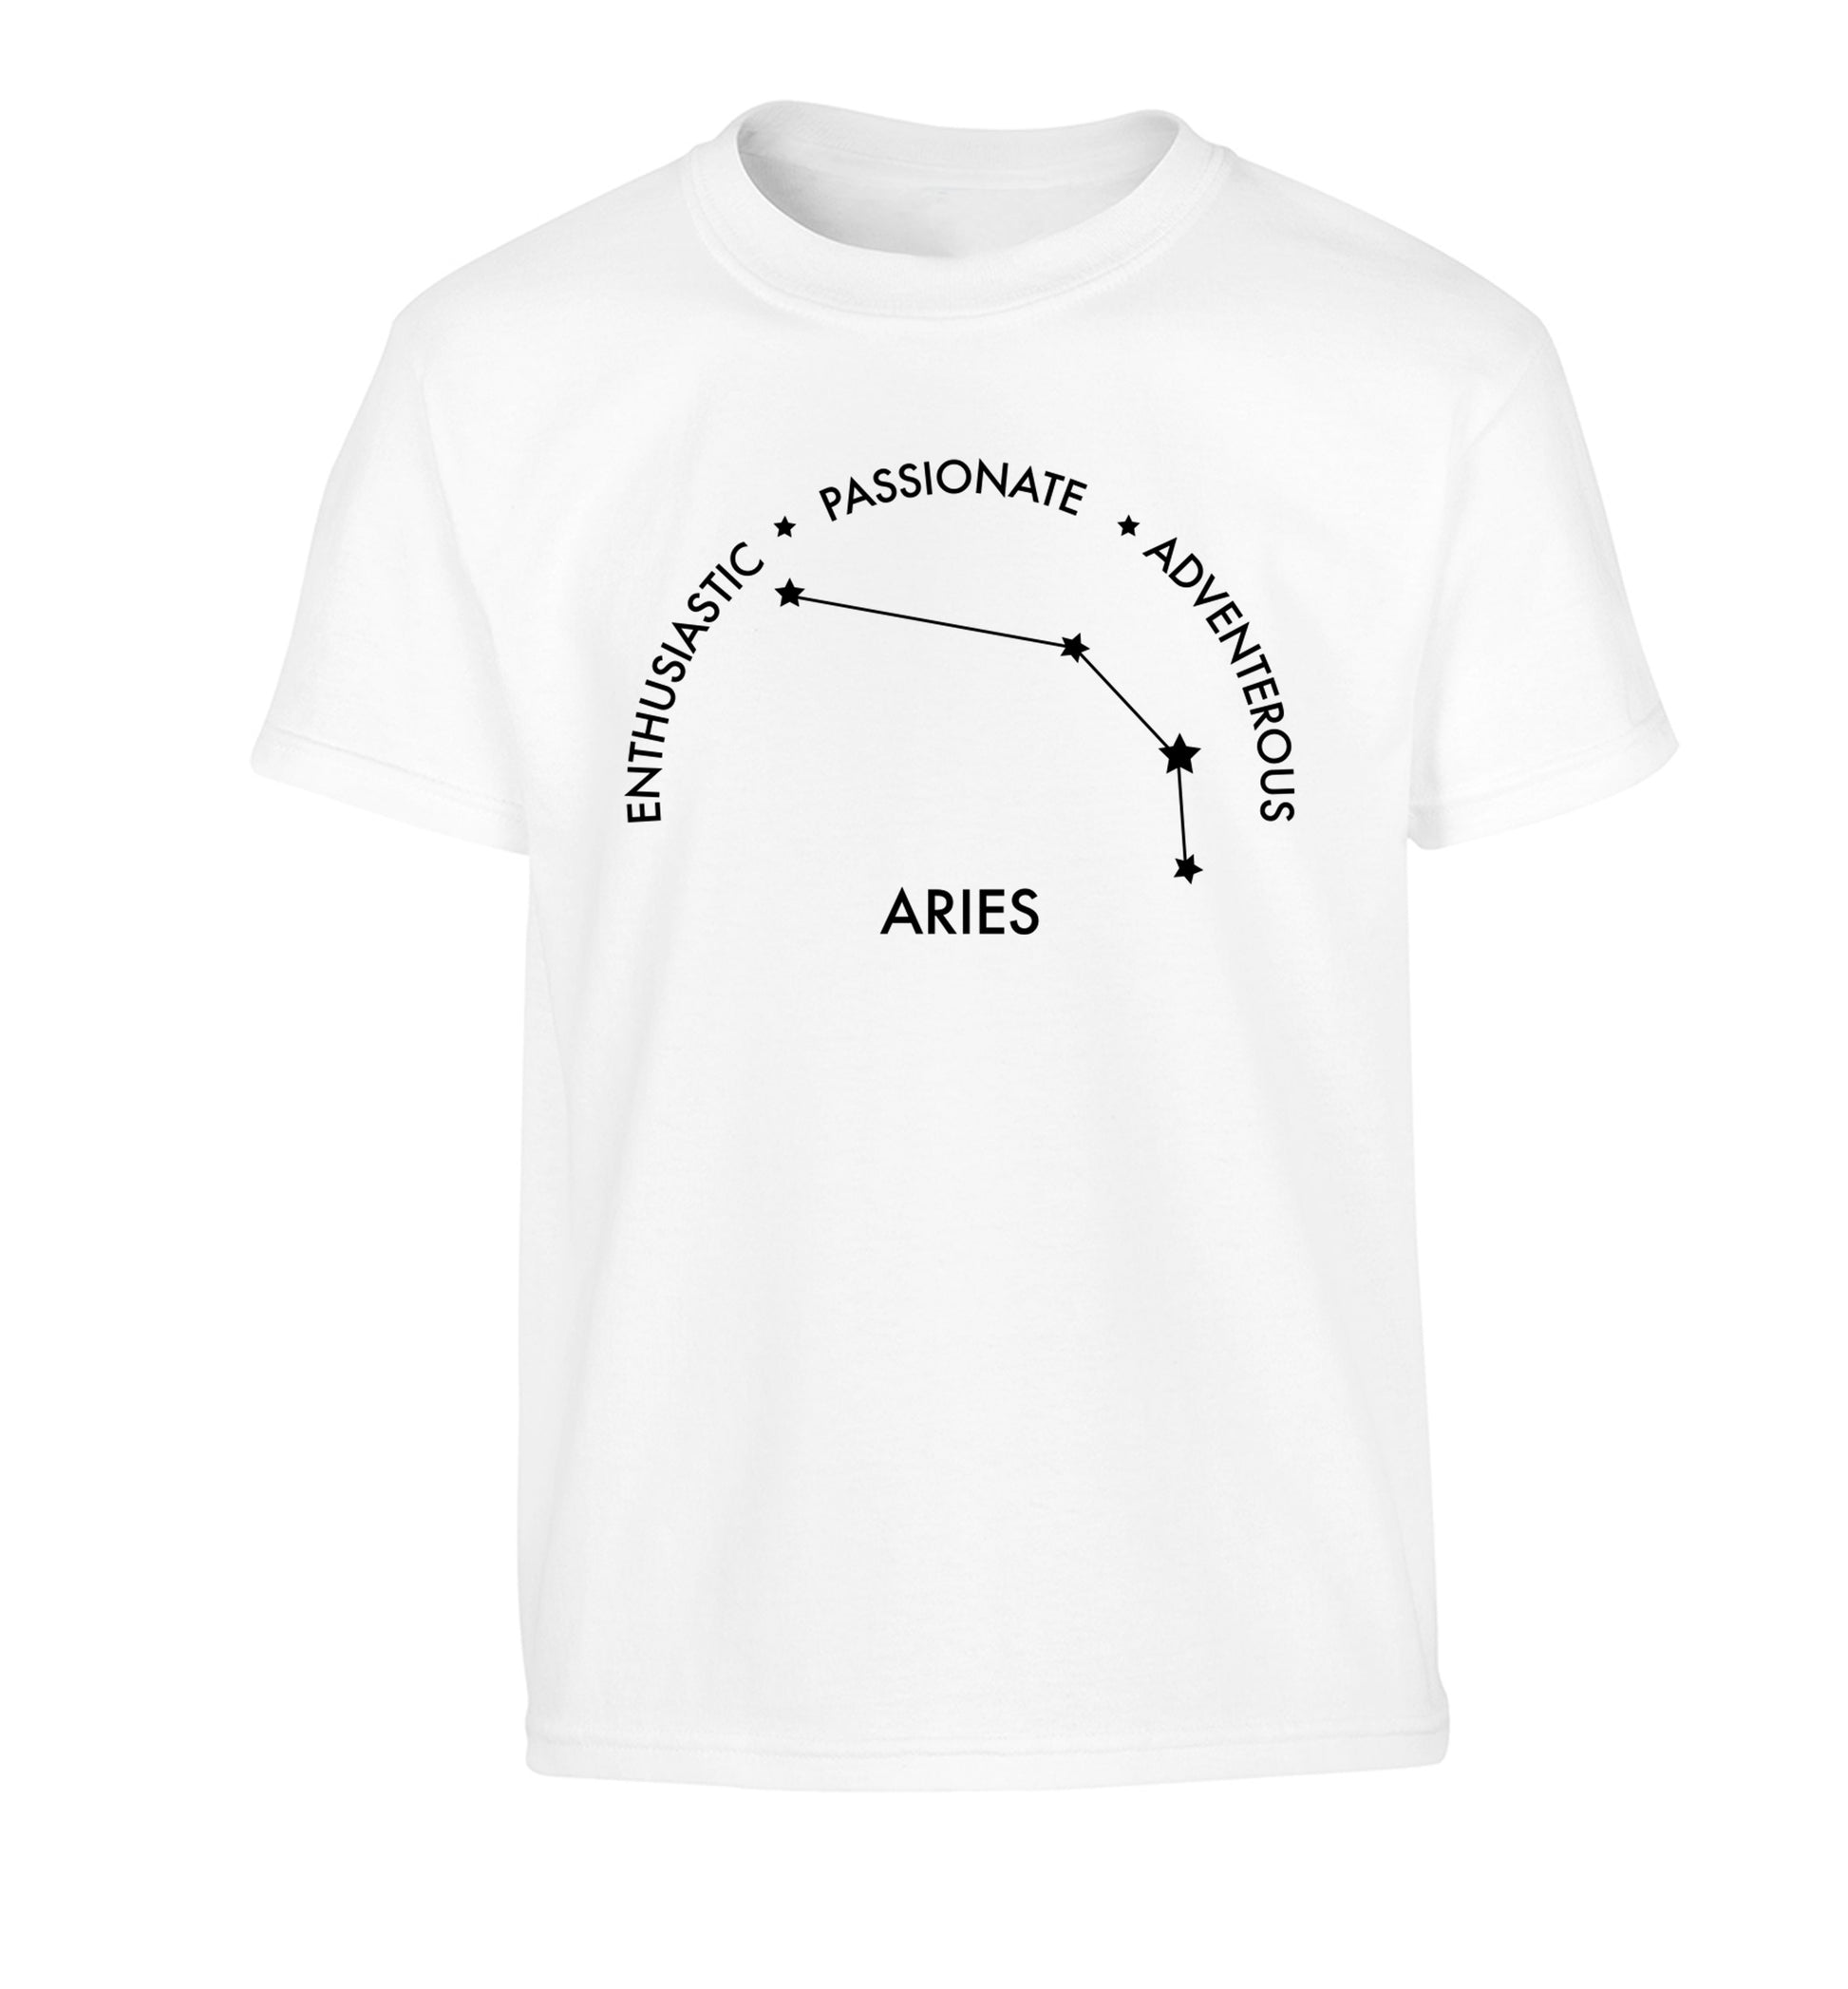 Aries enthusiastic | passionate | adventerous Children's white Tshirt 12-13 Years